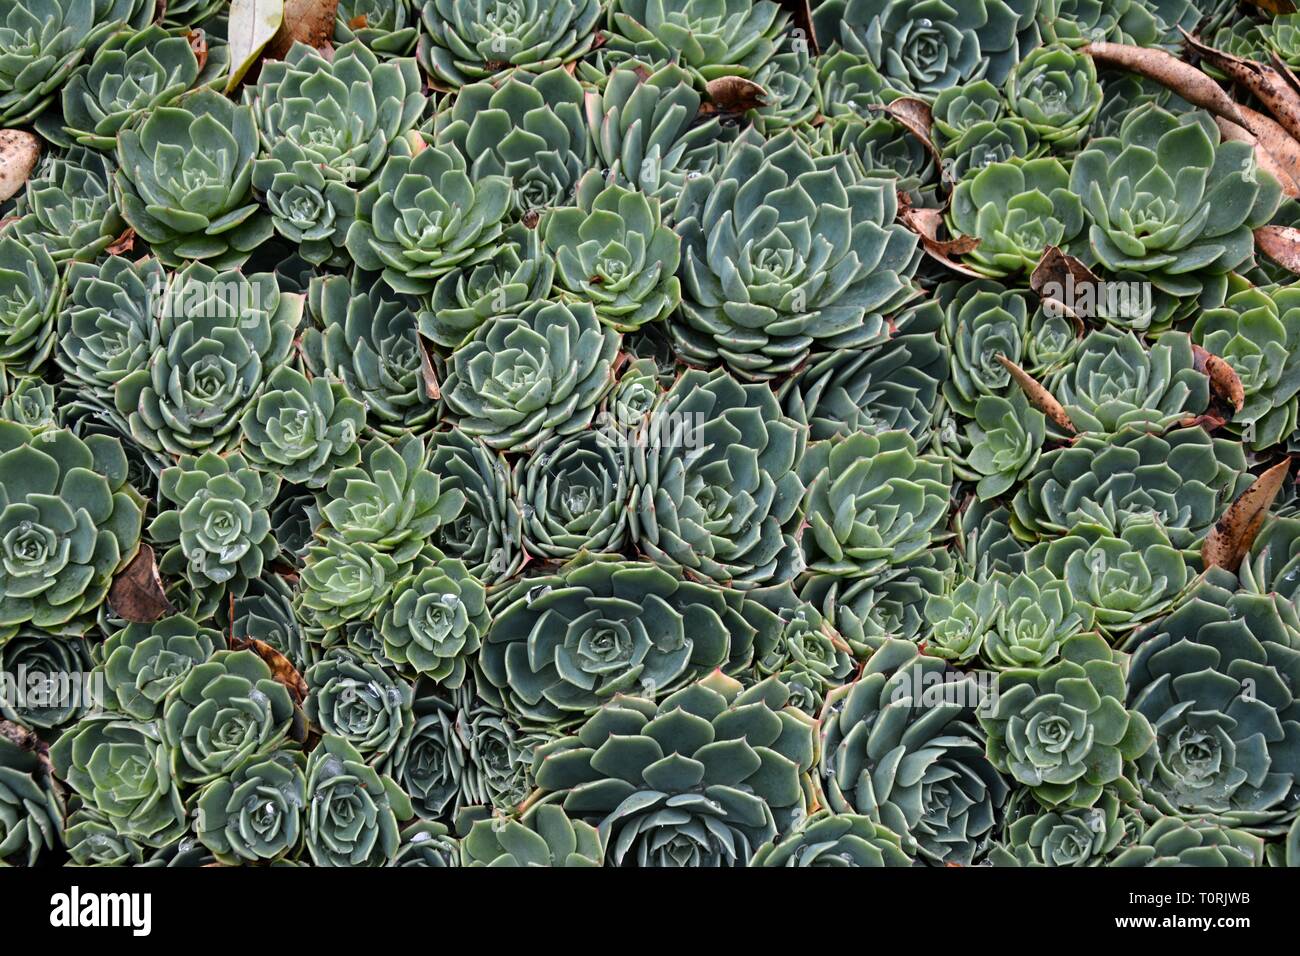 Echeveria succulent plants Stock Photo - Alamy